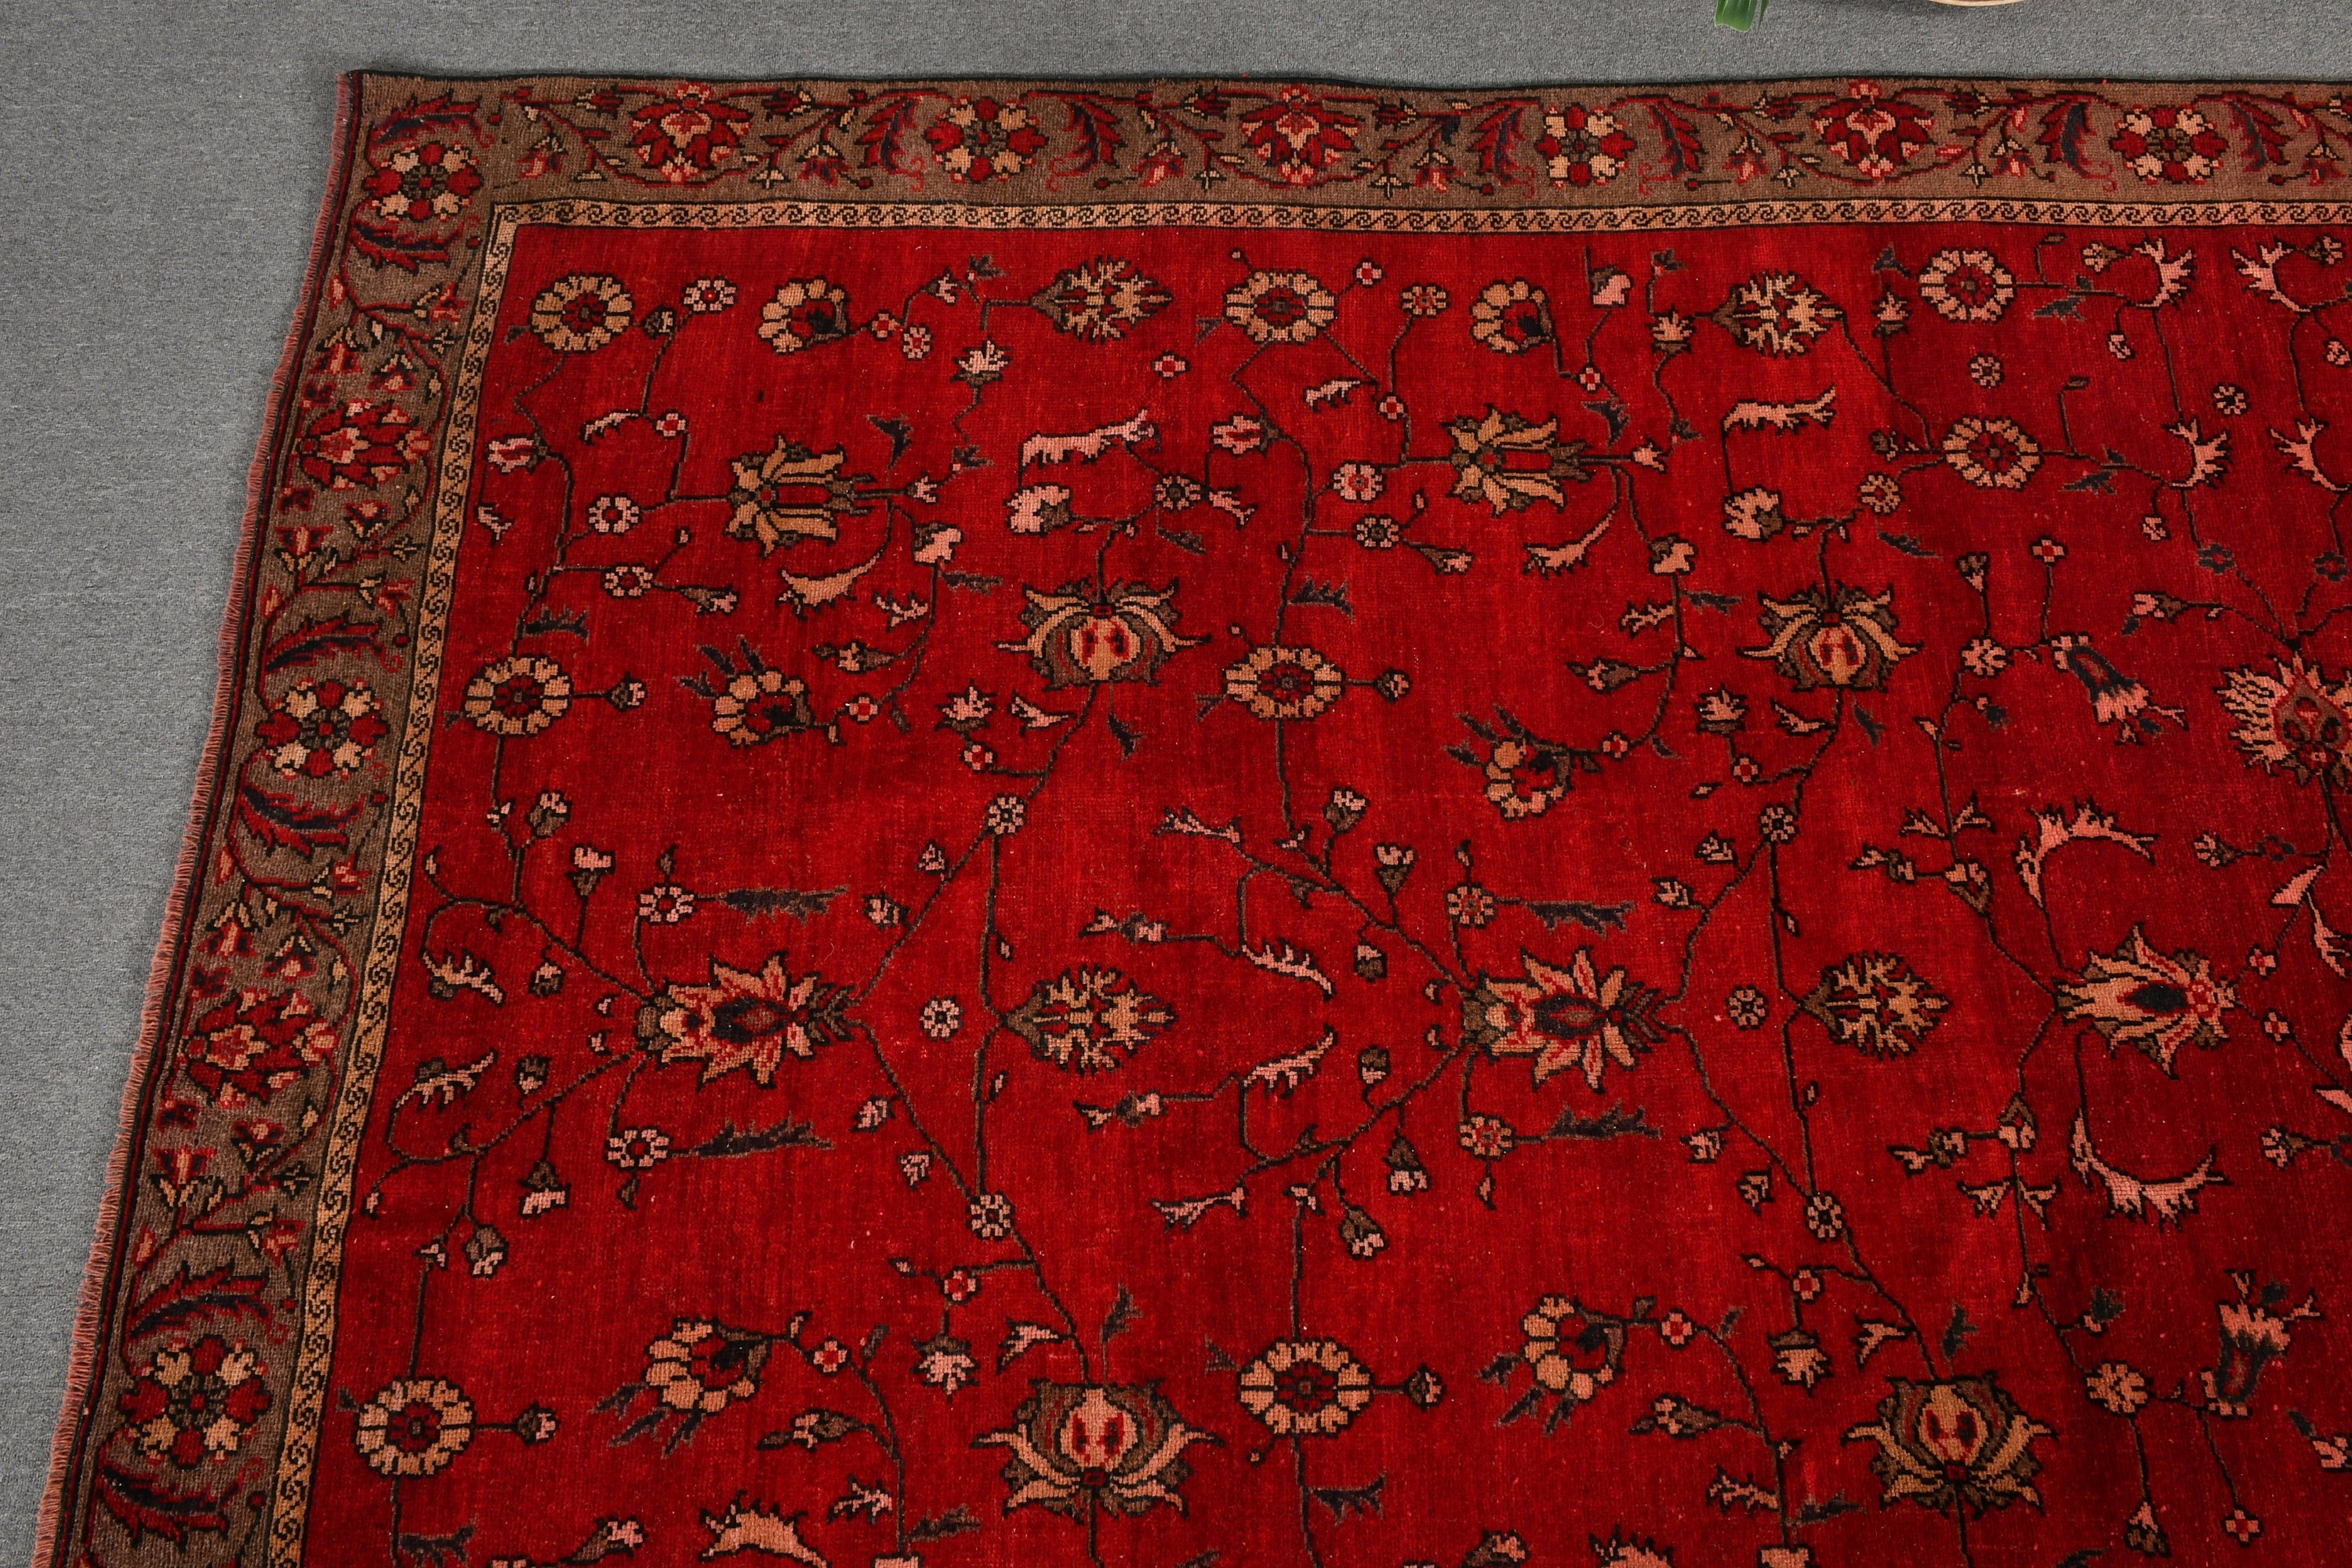 Turkish Rug, Salon Rug, 6.7x10.1 ft Large Rugs, Rugs for Living Room, Cool Rugs, Oriental Rug, Red Antique Rug, Bedroom Rug, Vintage Rug